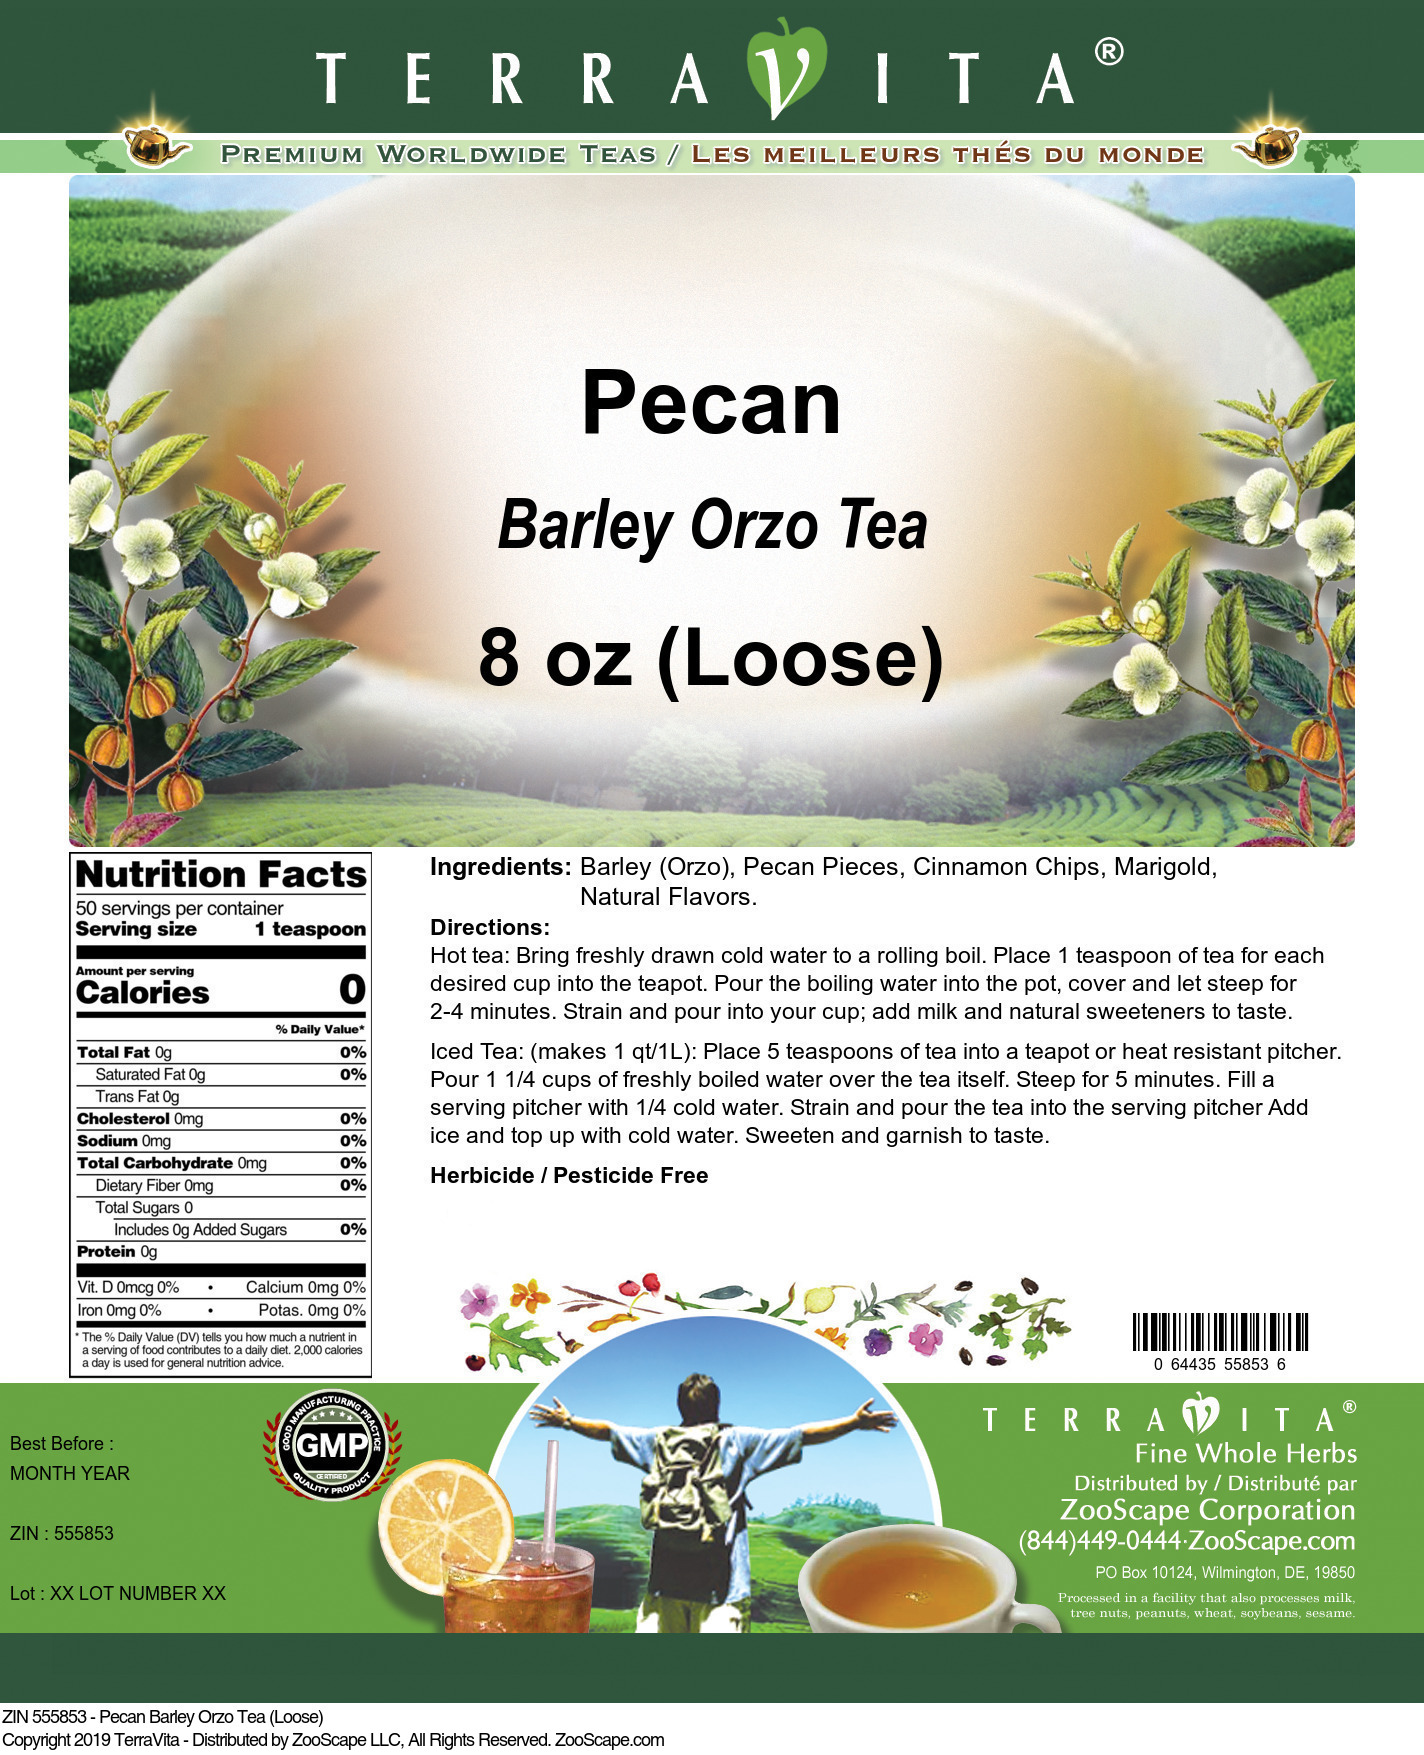 Pecan Barley Orzo Tea (Loose) - Label